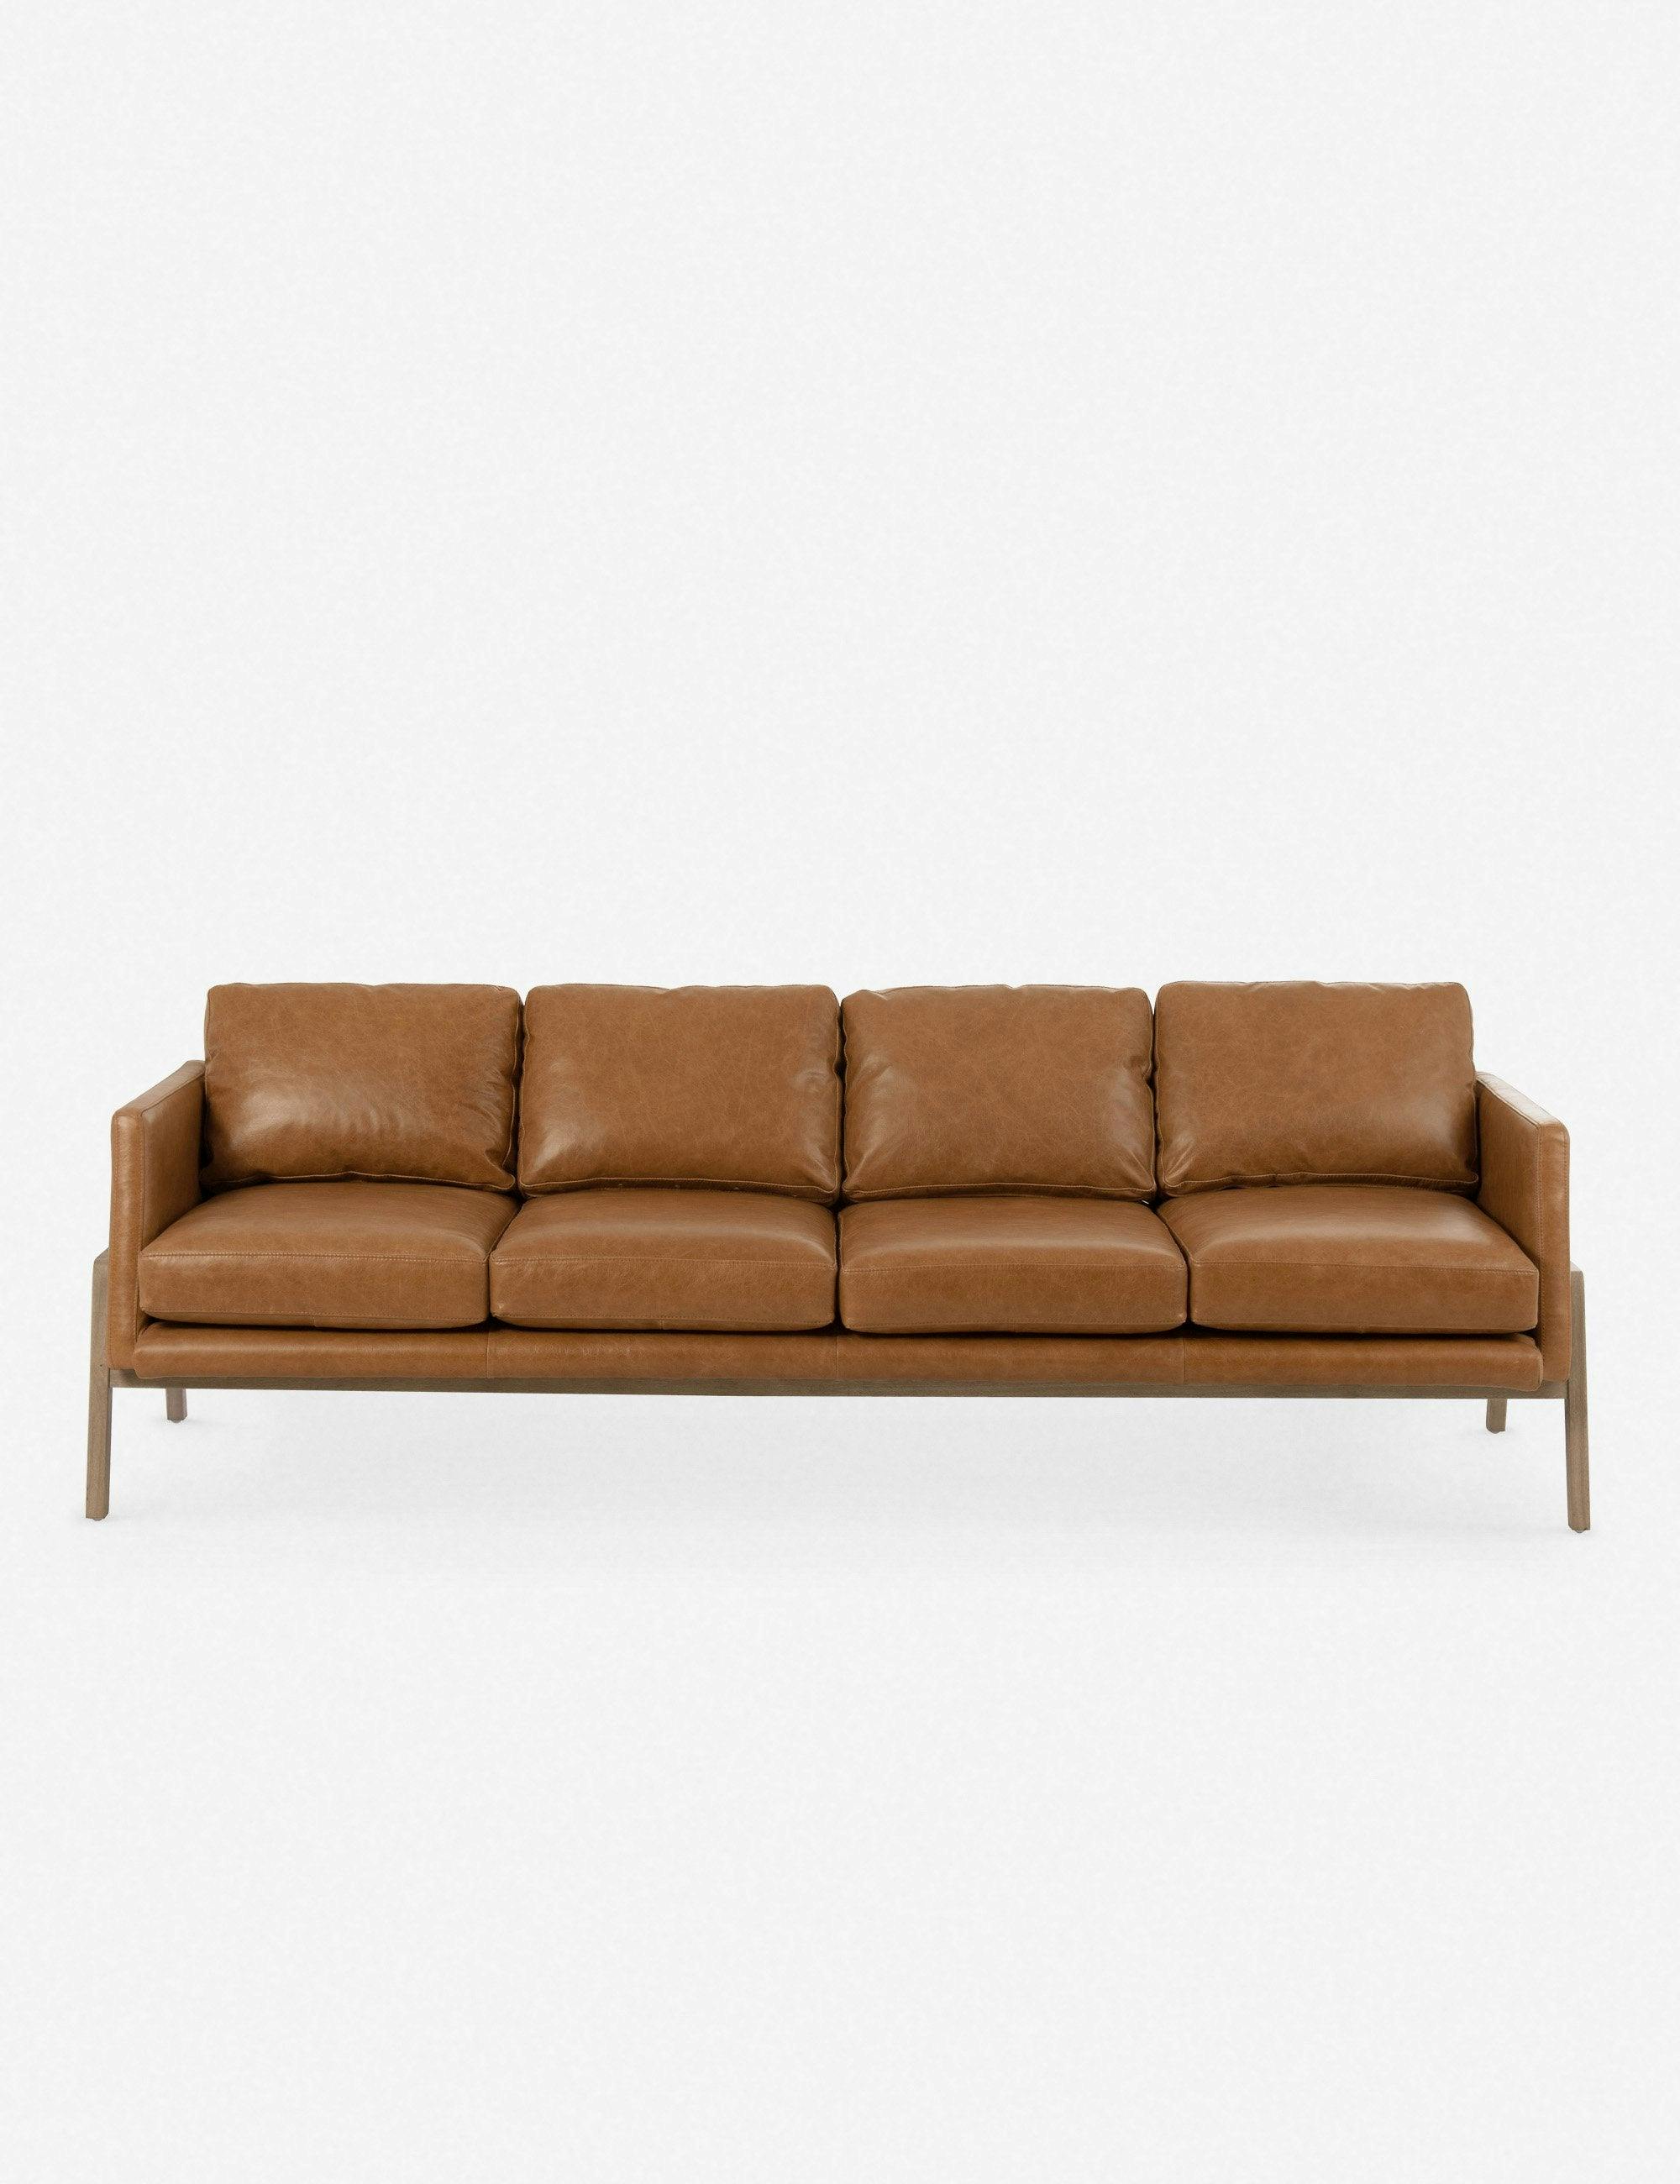 Afton Tan Leather Sofa